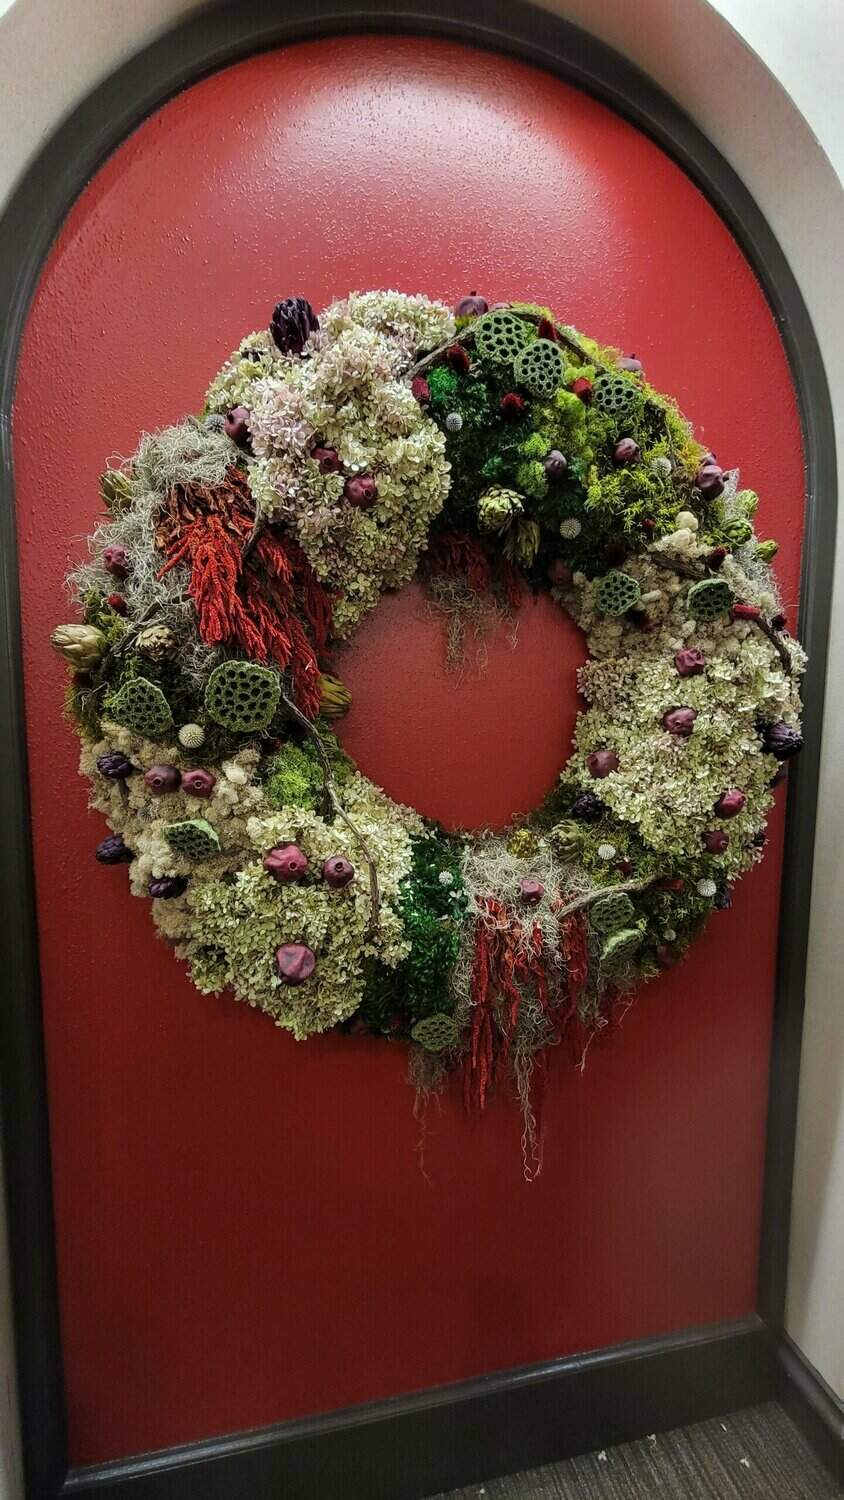 mossy wreath